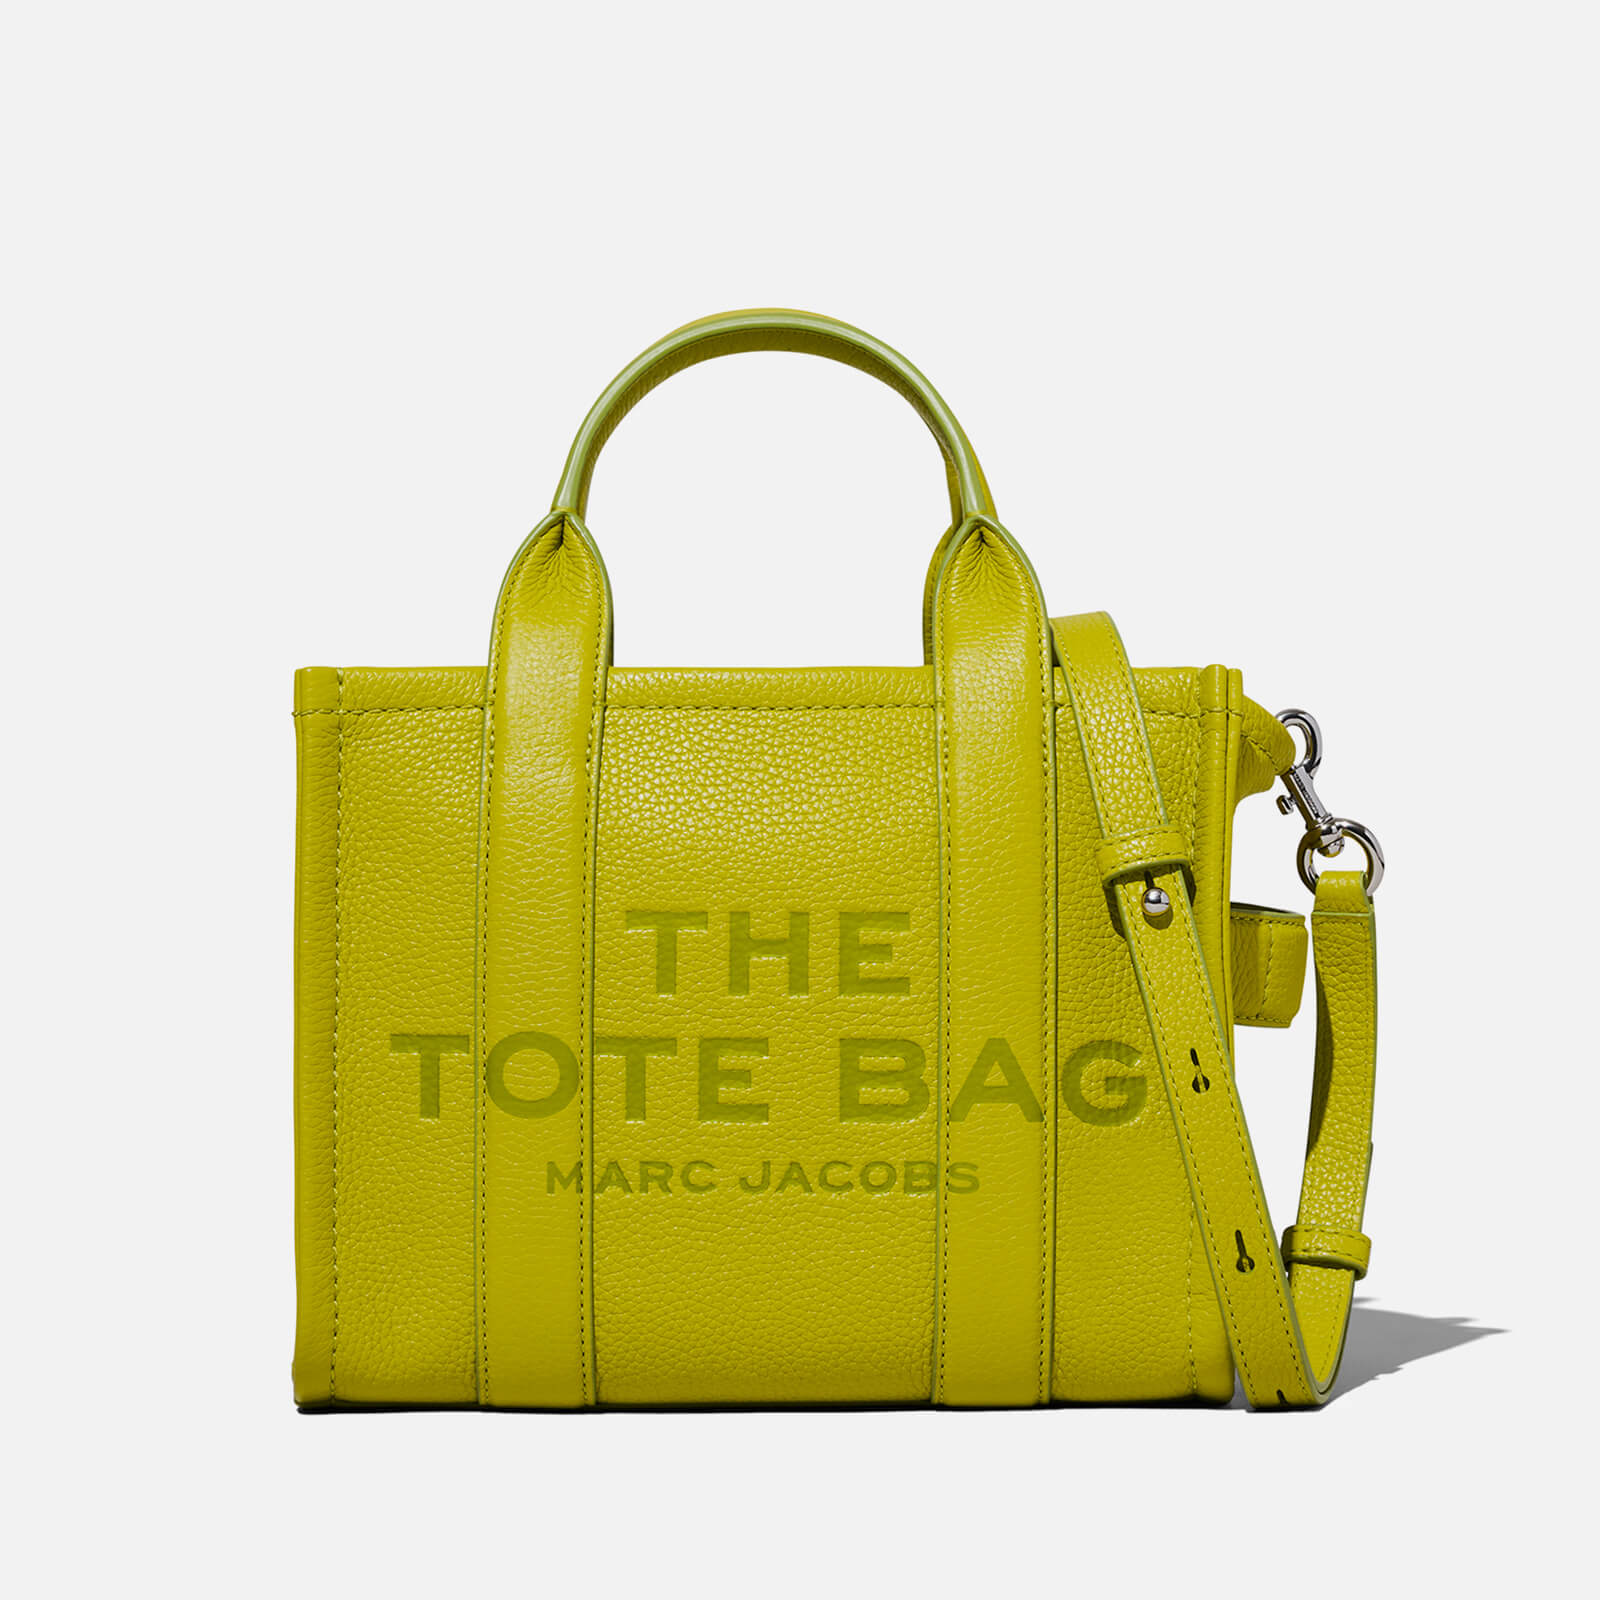 Marc Jacobs Women's The Mini Leather Tote Bag - Citronelle